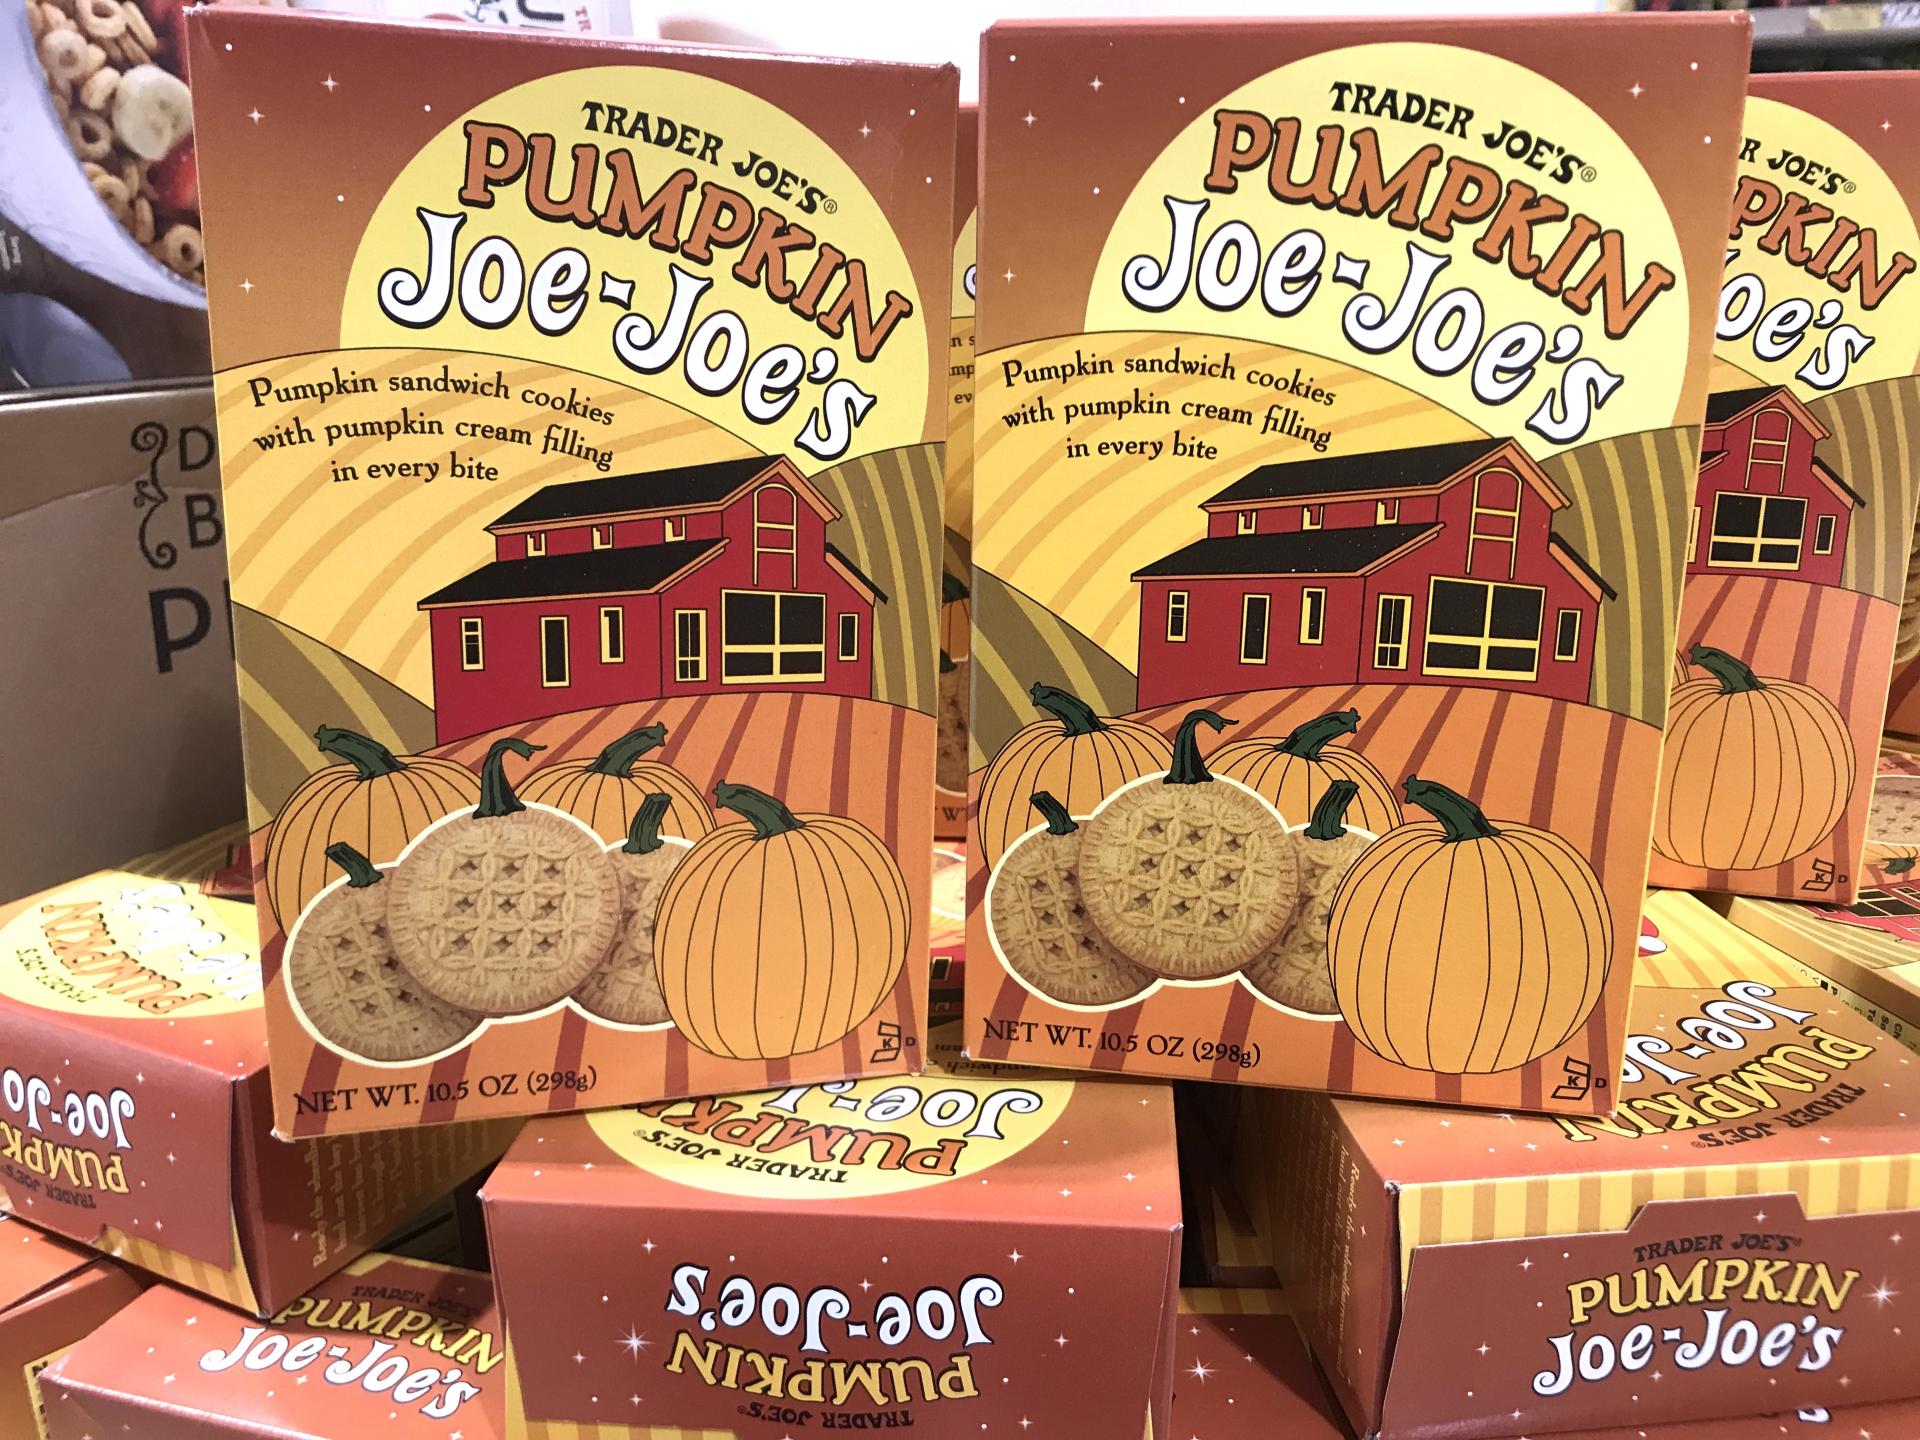 Trader Joes Pumpkin Joe Joe's